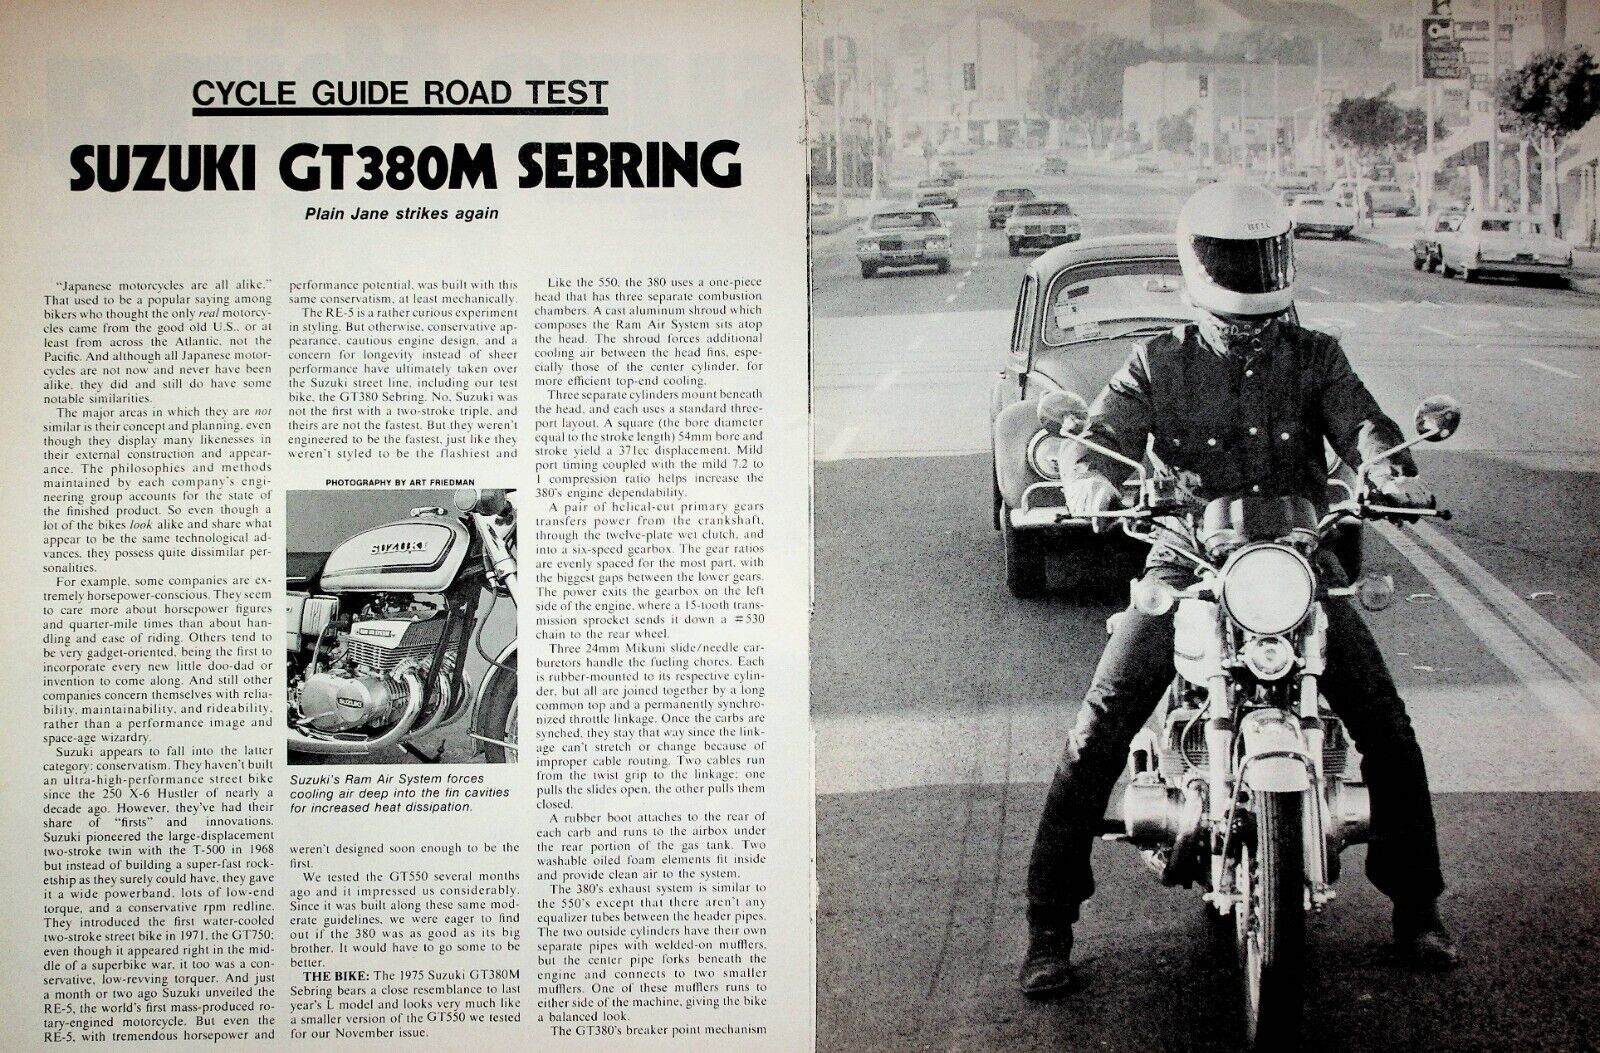 1975 Suzuki GT380M Sebring - 8-Page Vintage Motorcycle Road Test Artlcle